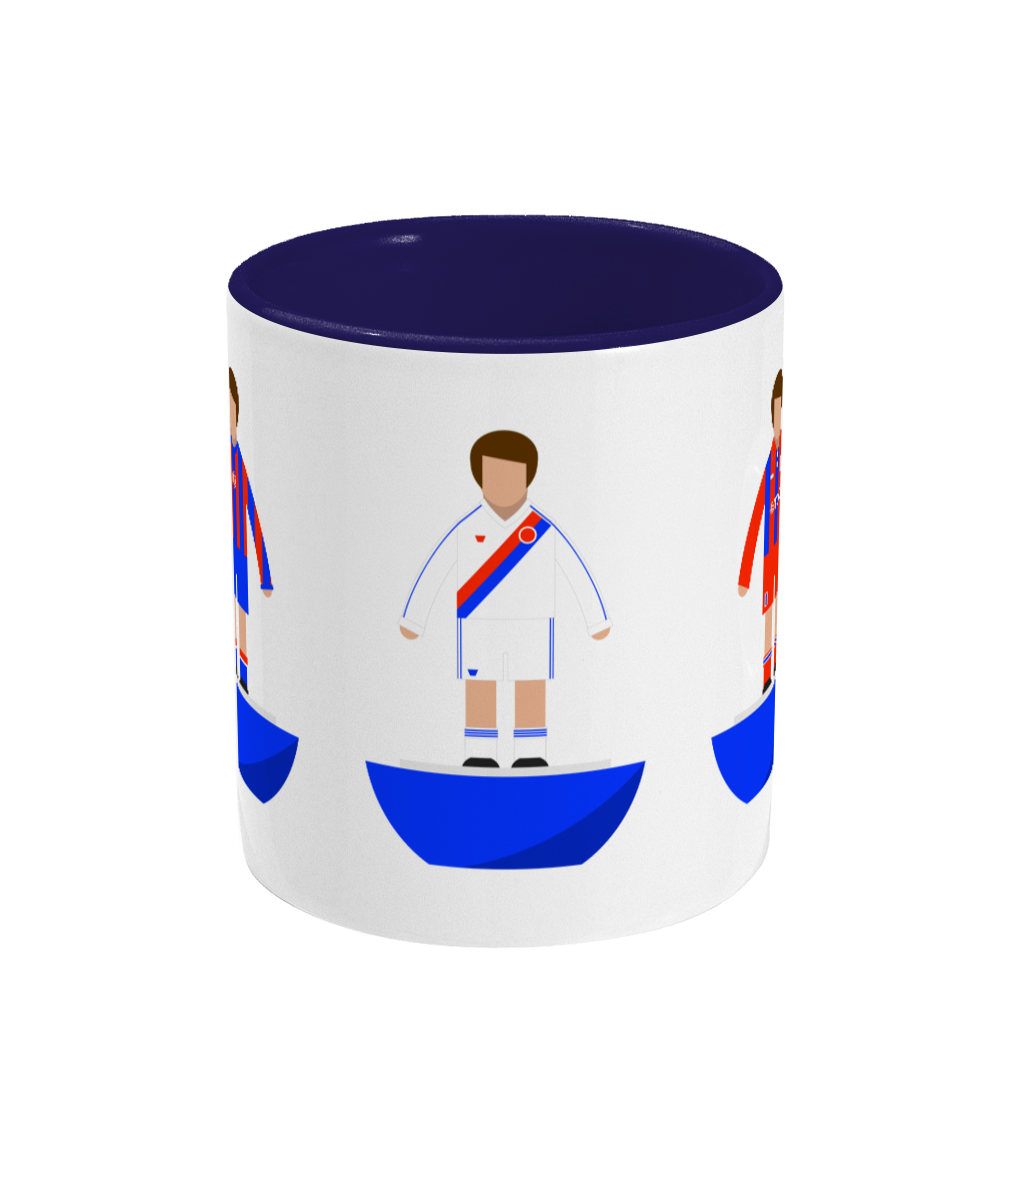 Football Kits 'Crystal Palace combined' Mug